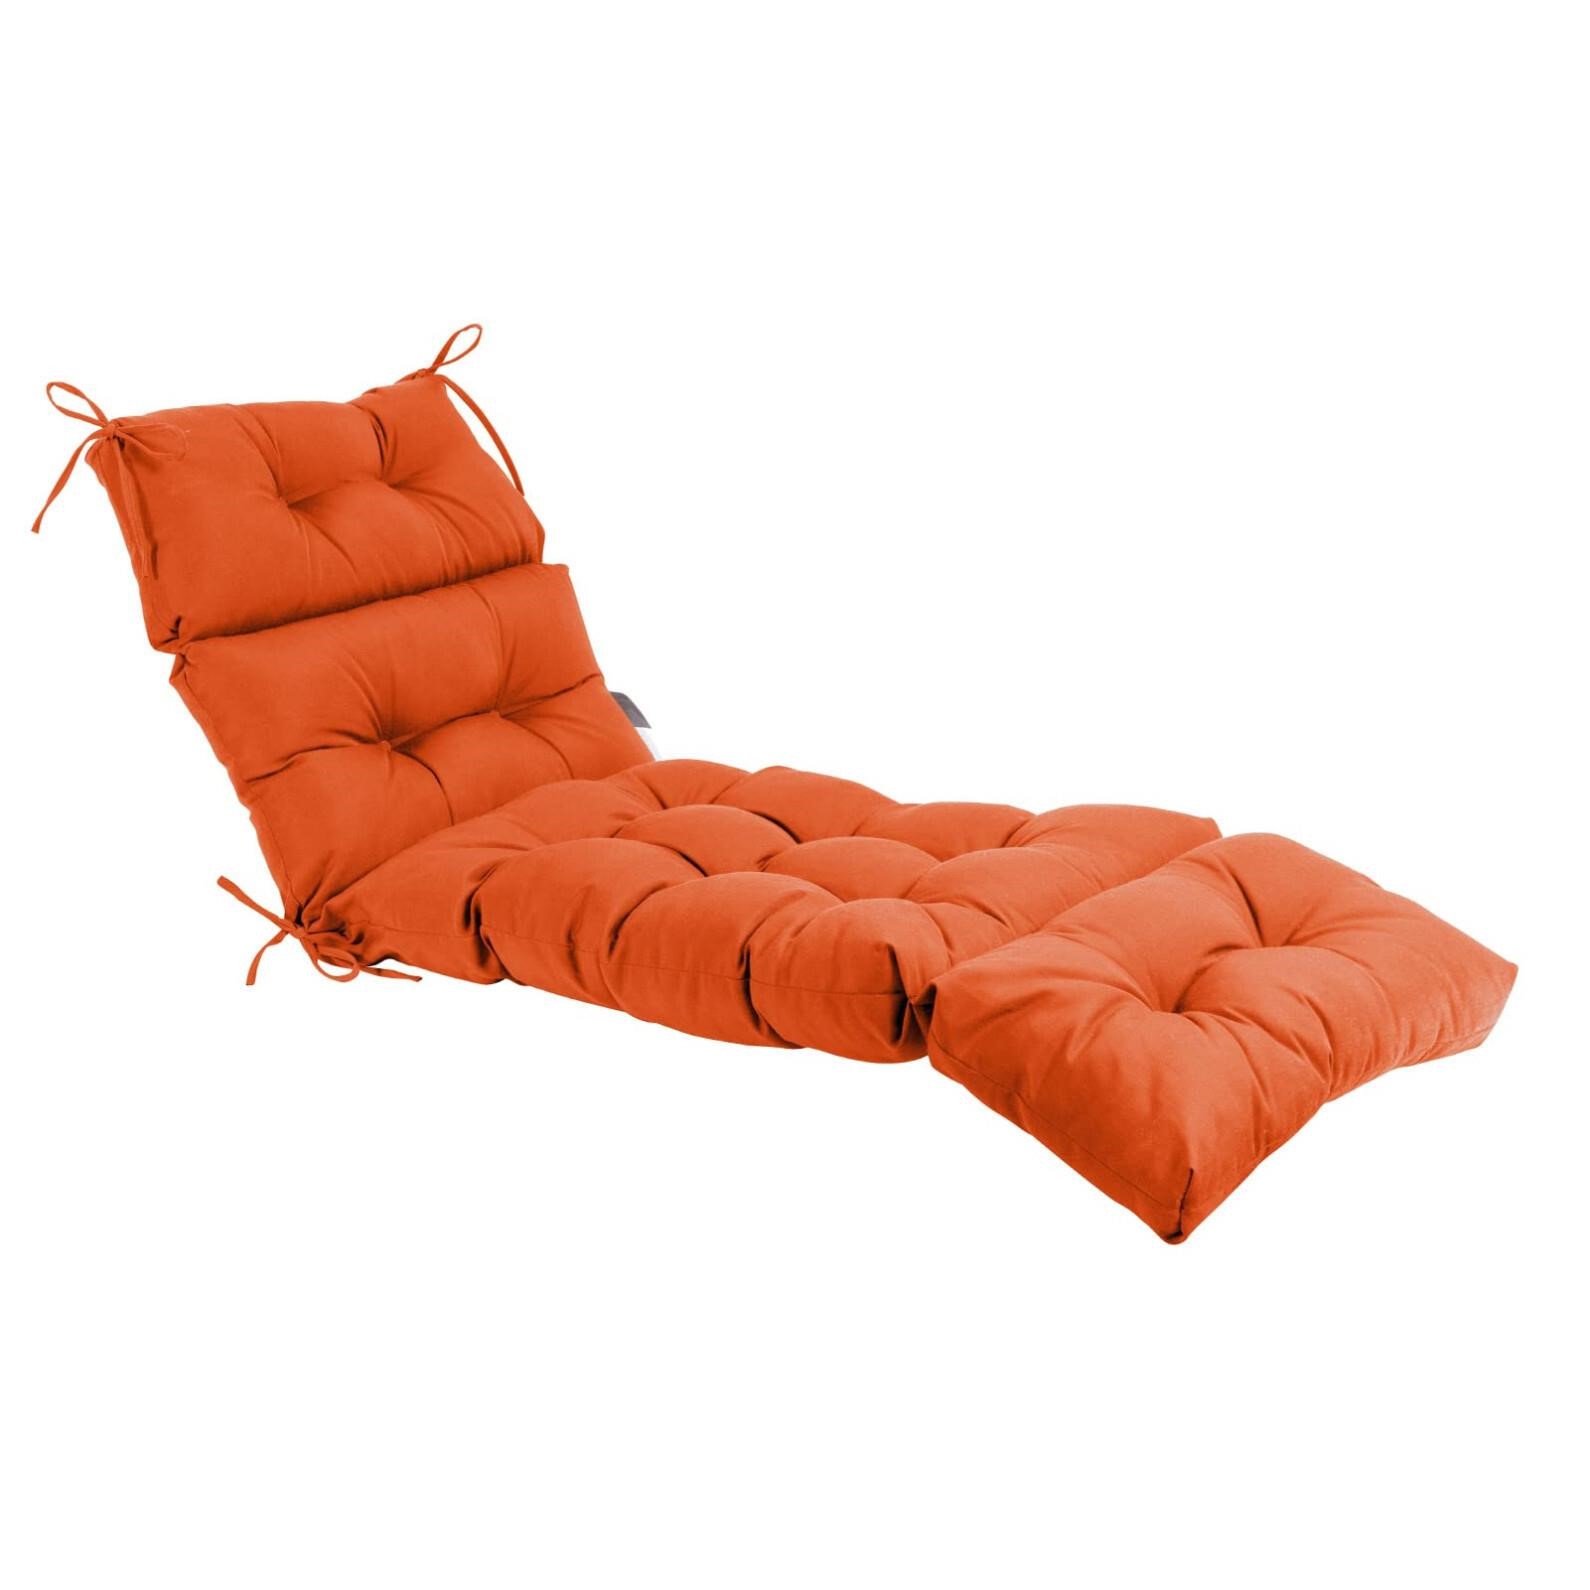 QILLOWAY Indoor/Outdoor Chaise Lounge Cushion,Spri